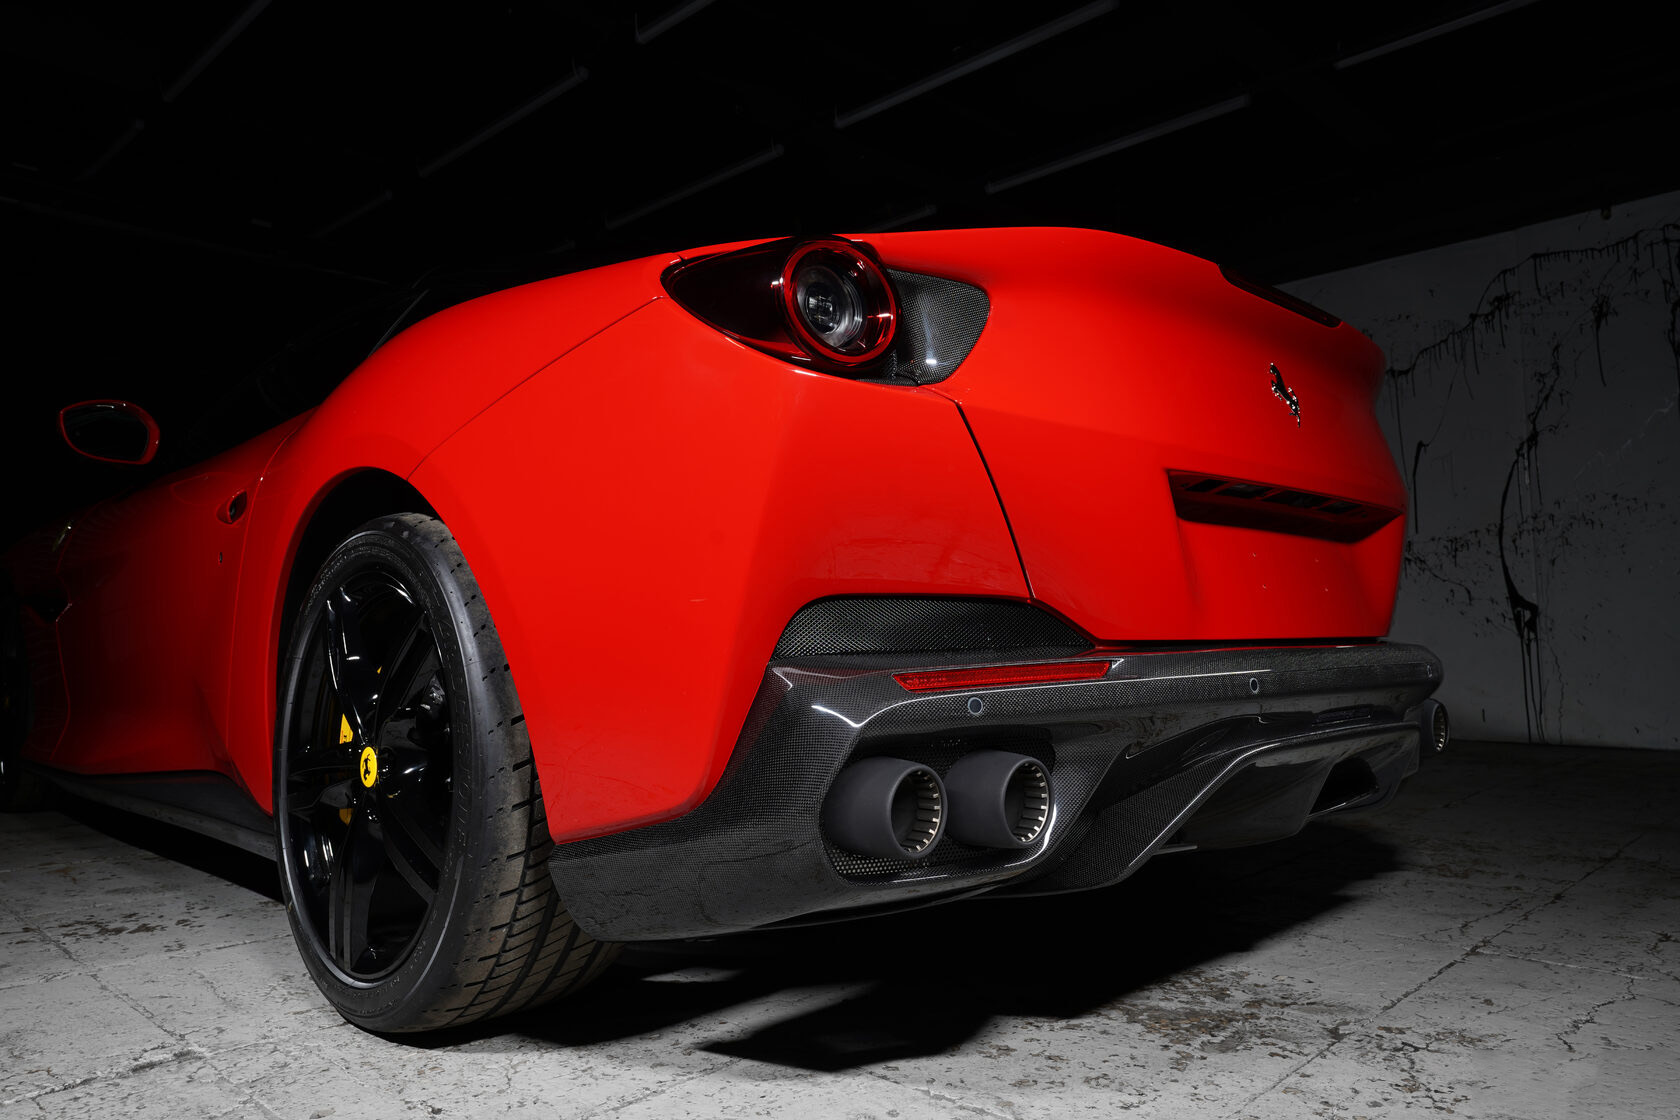 Check price and buy Forged Carbon Fiber Body kit set for Ferrari Portofino